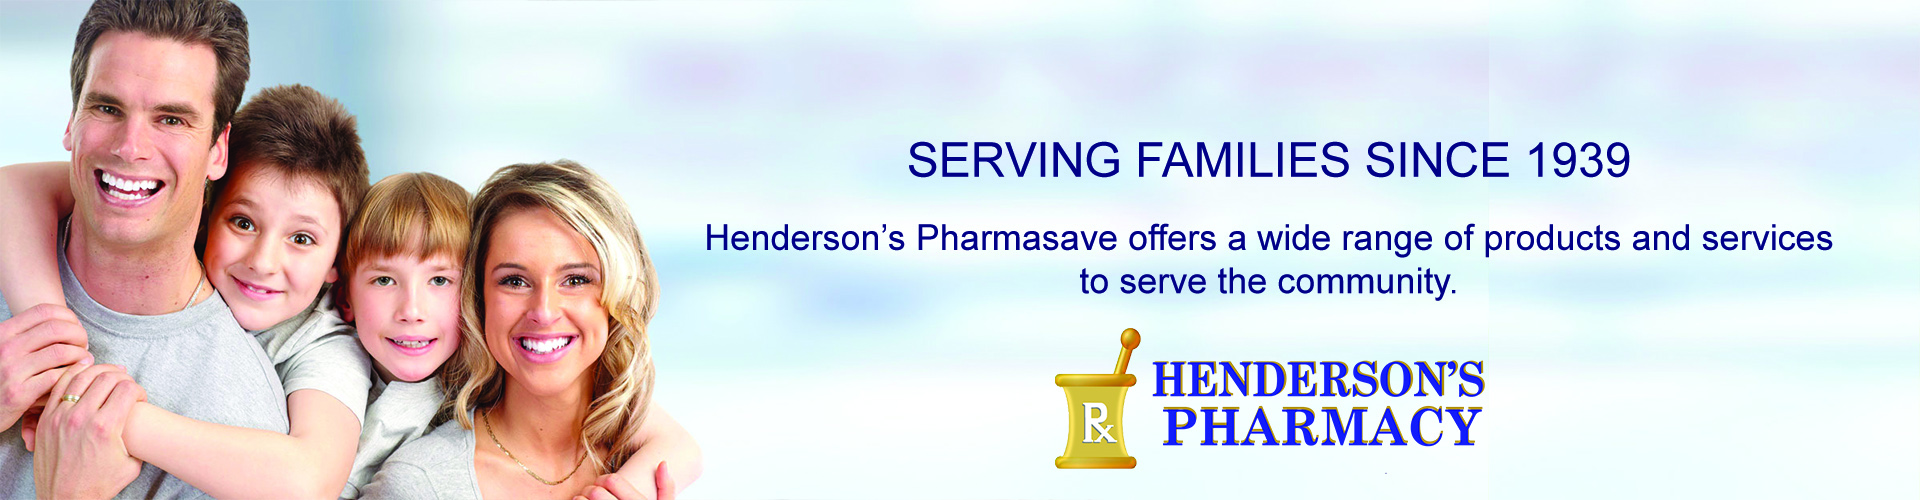 Serving Families Henderson's Pharmasave